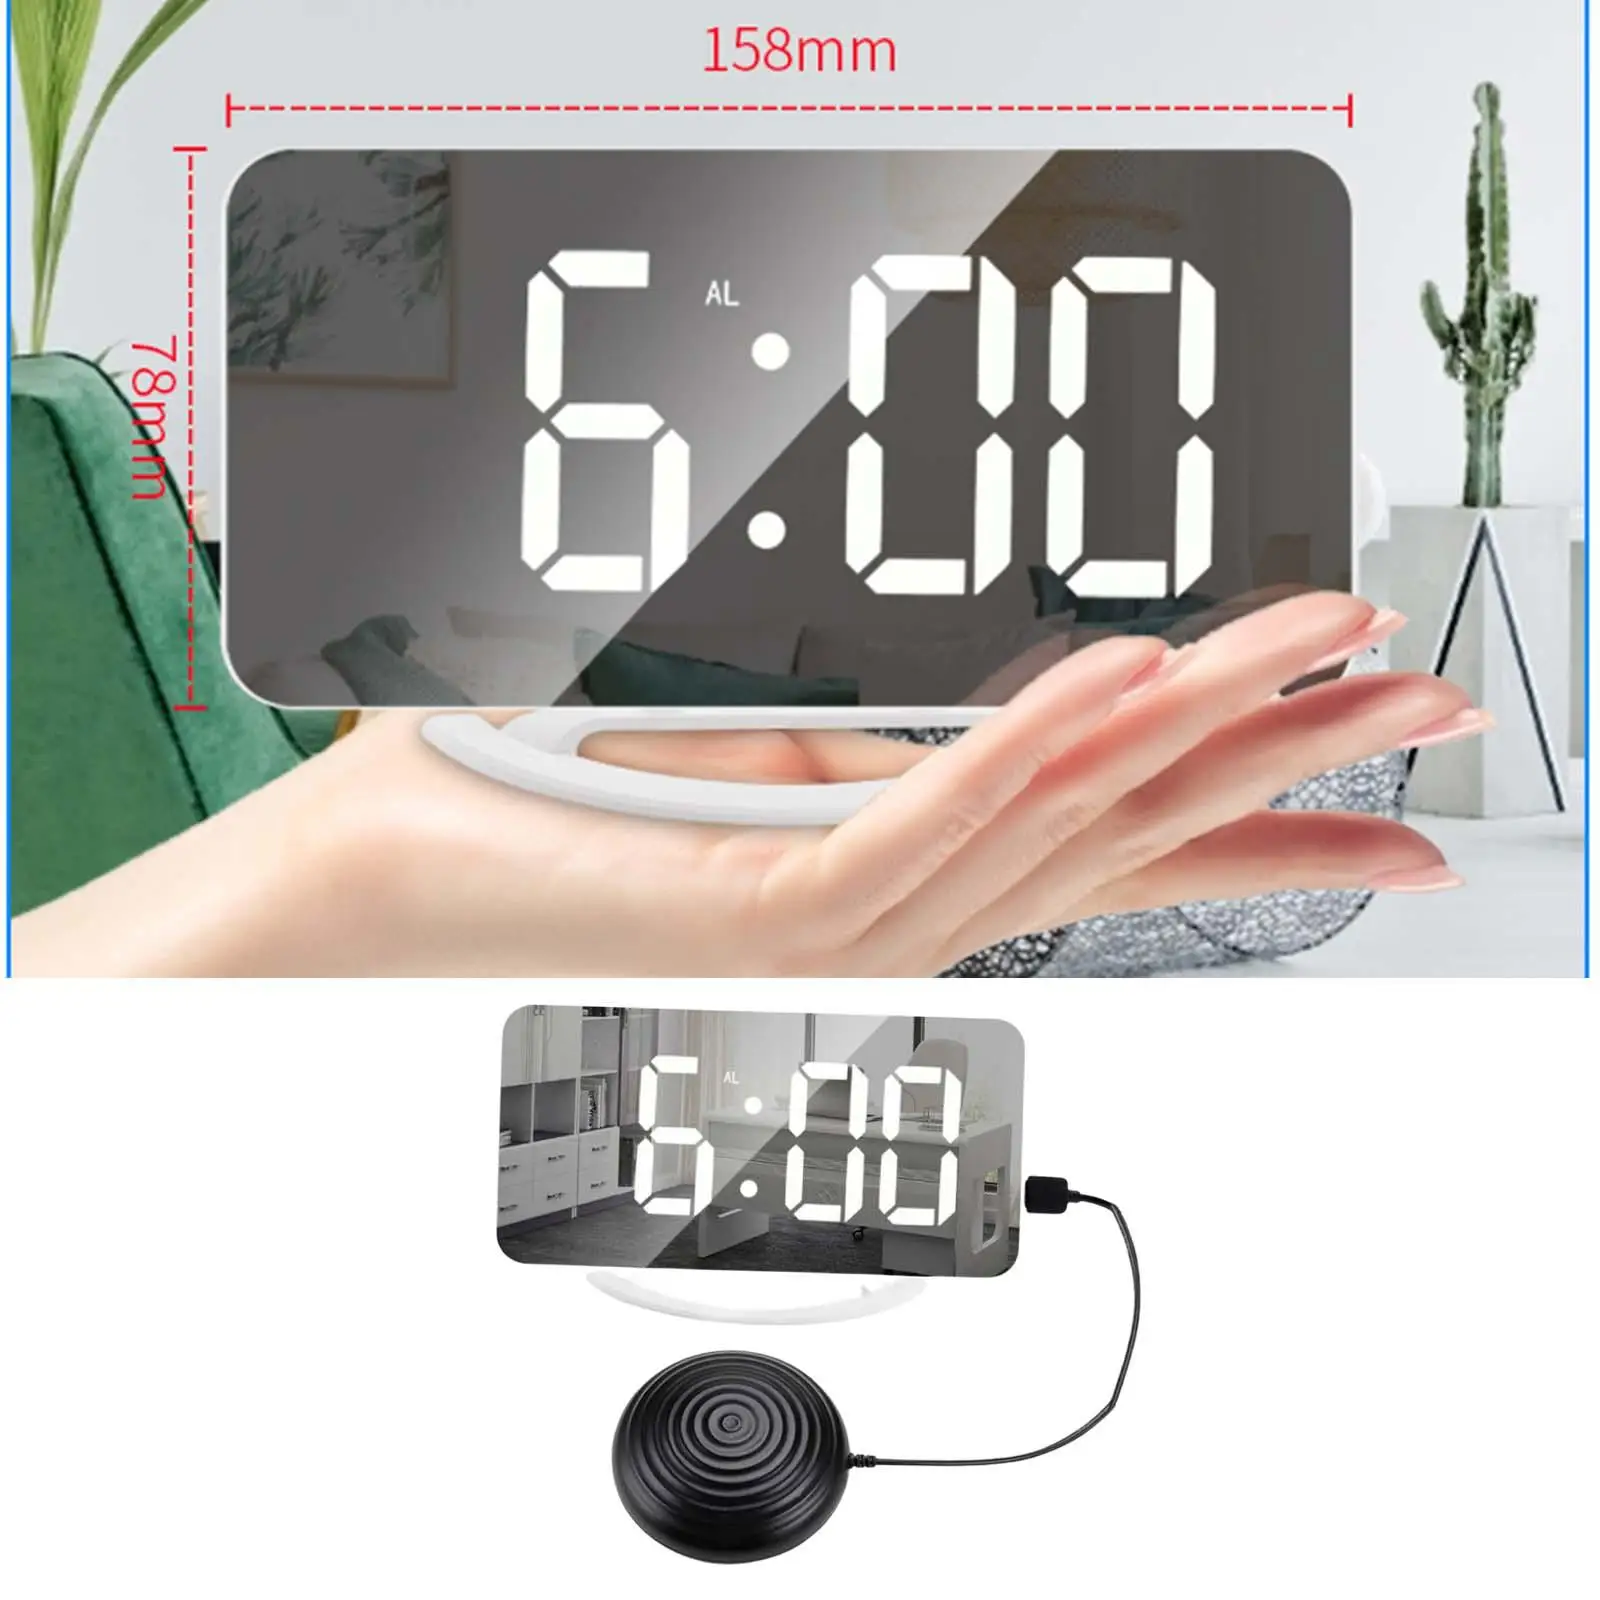 Digital Loud Alarm Clock Vibrating Adjustable Brightness Night Mode Bedroom